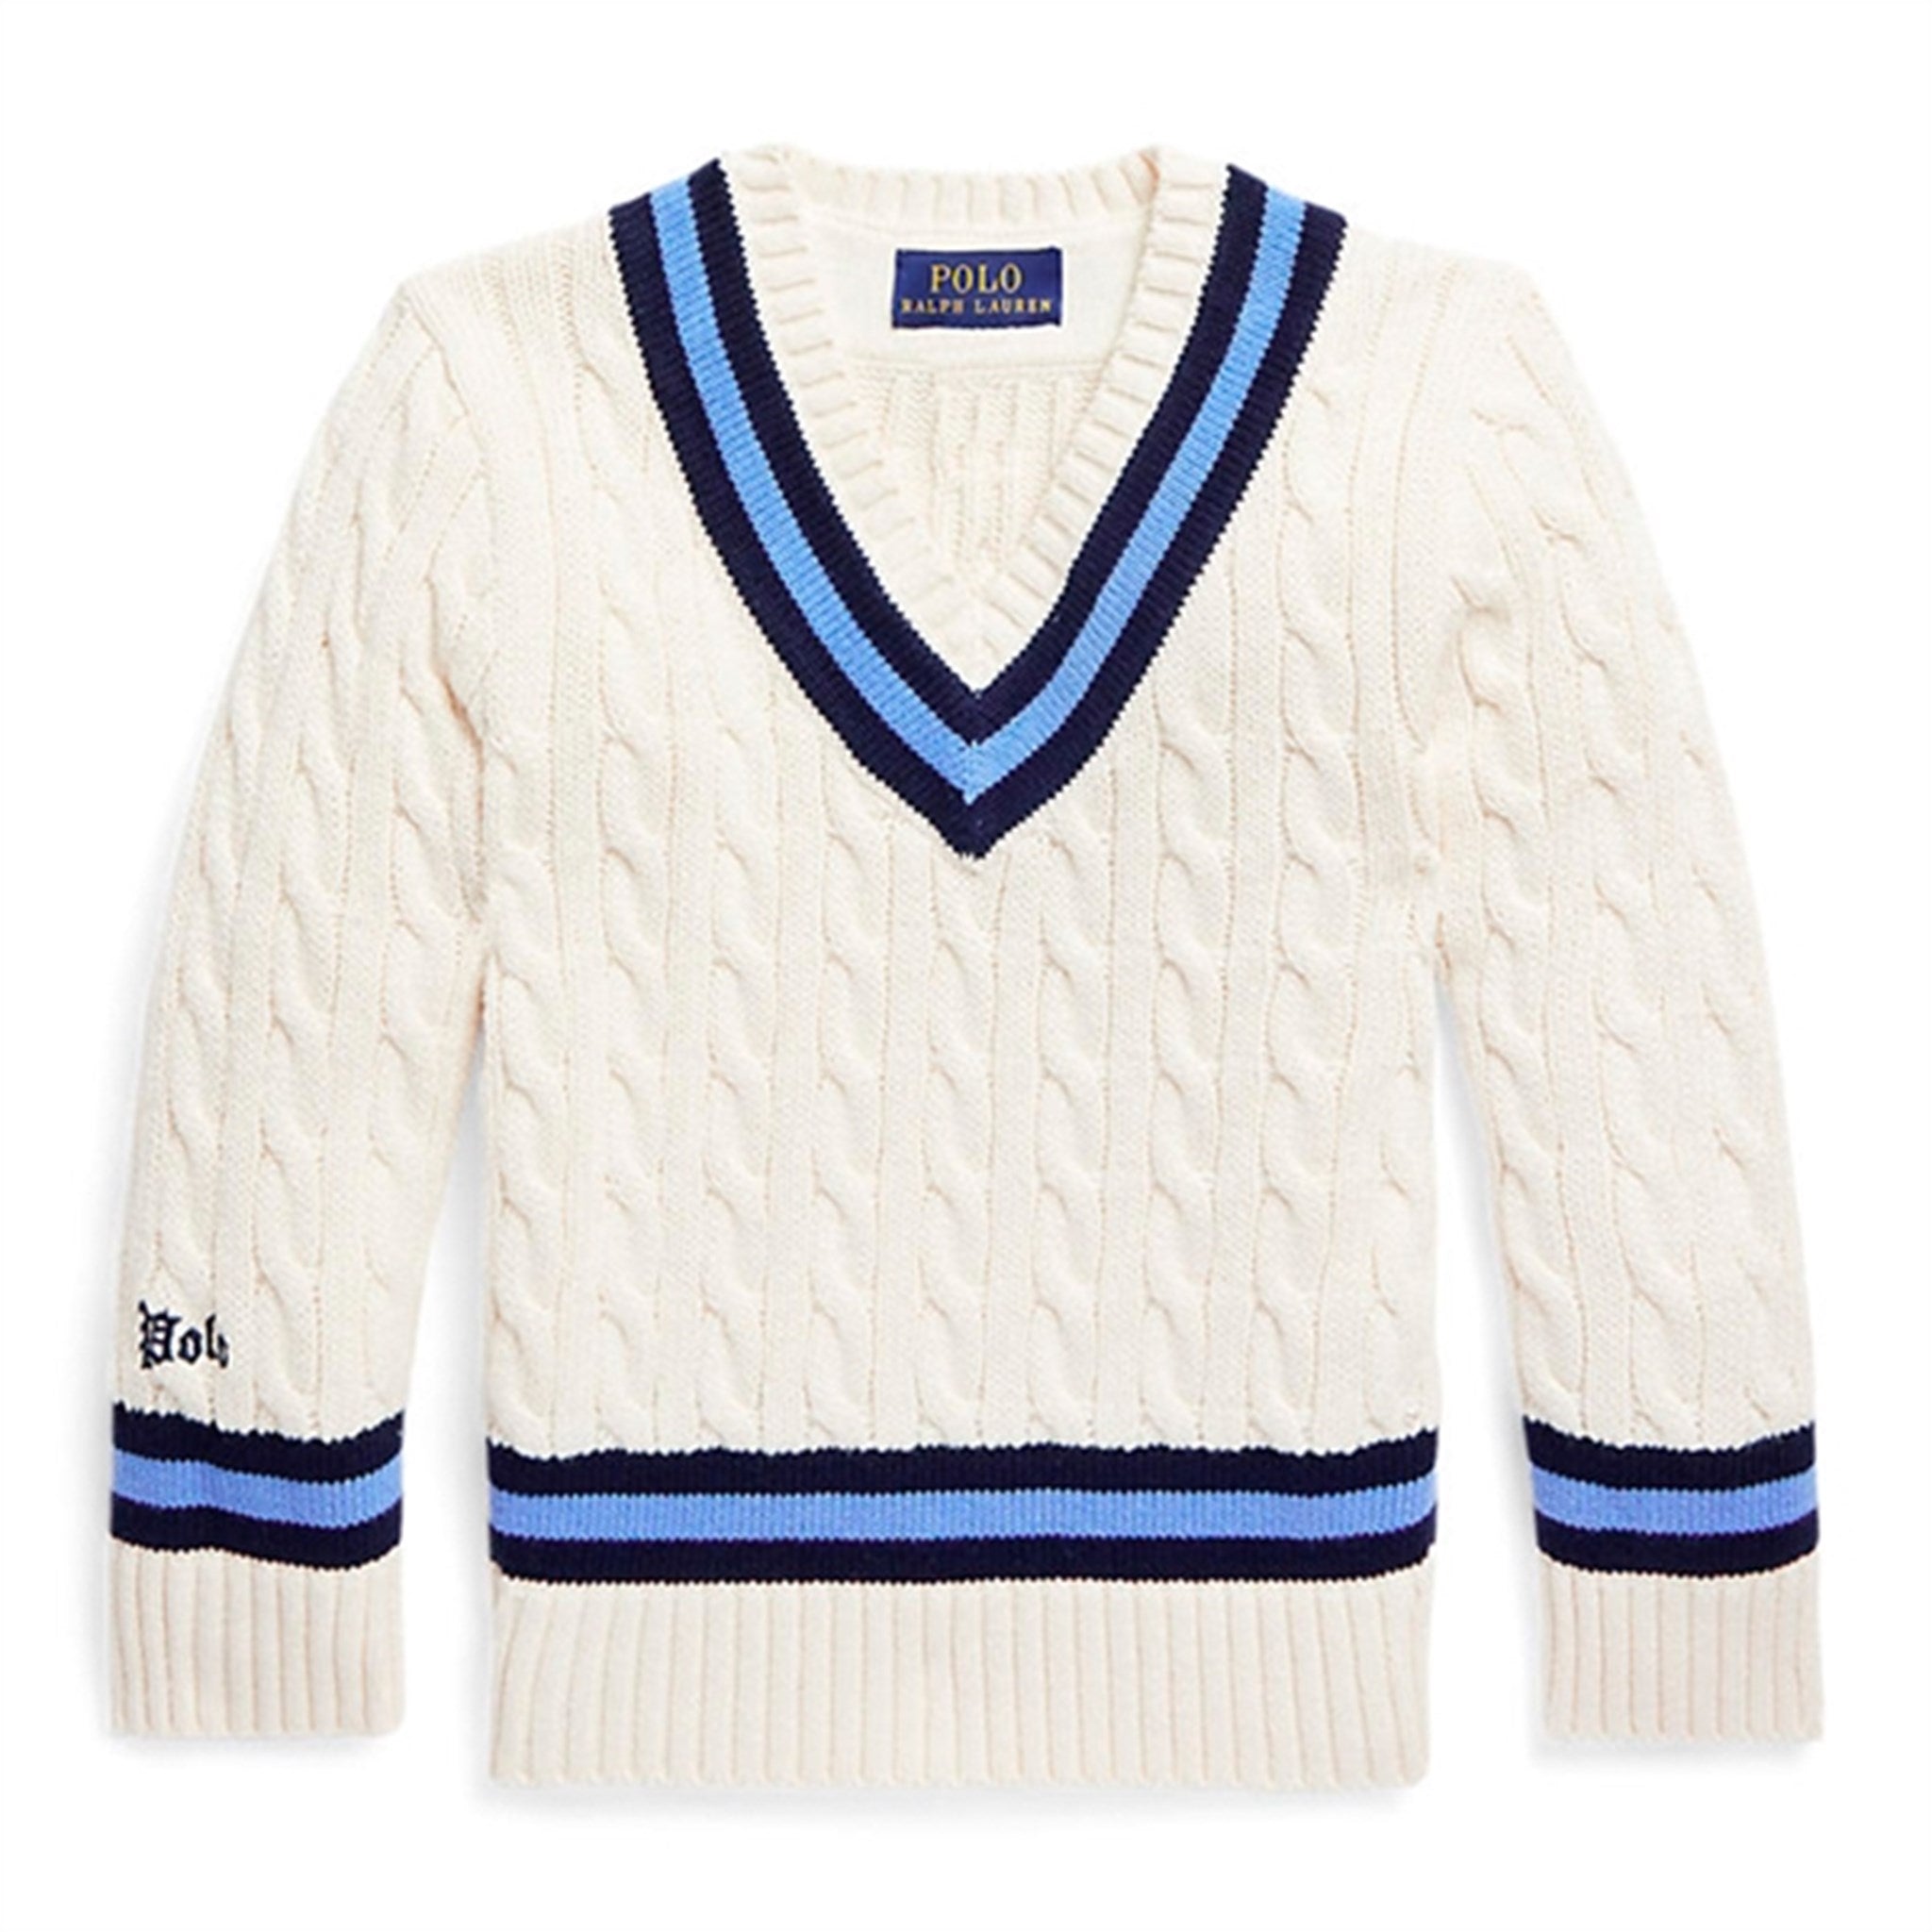 Polo Ralph Lauren Cricket Knitted Sweater Cream White/Navy Stripes